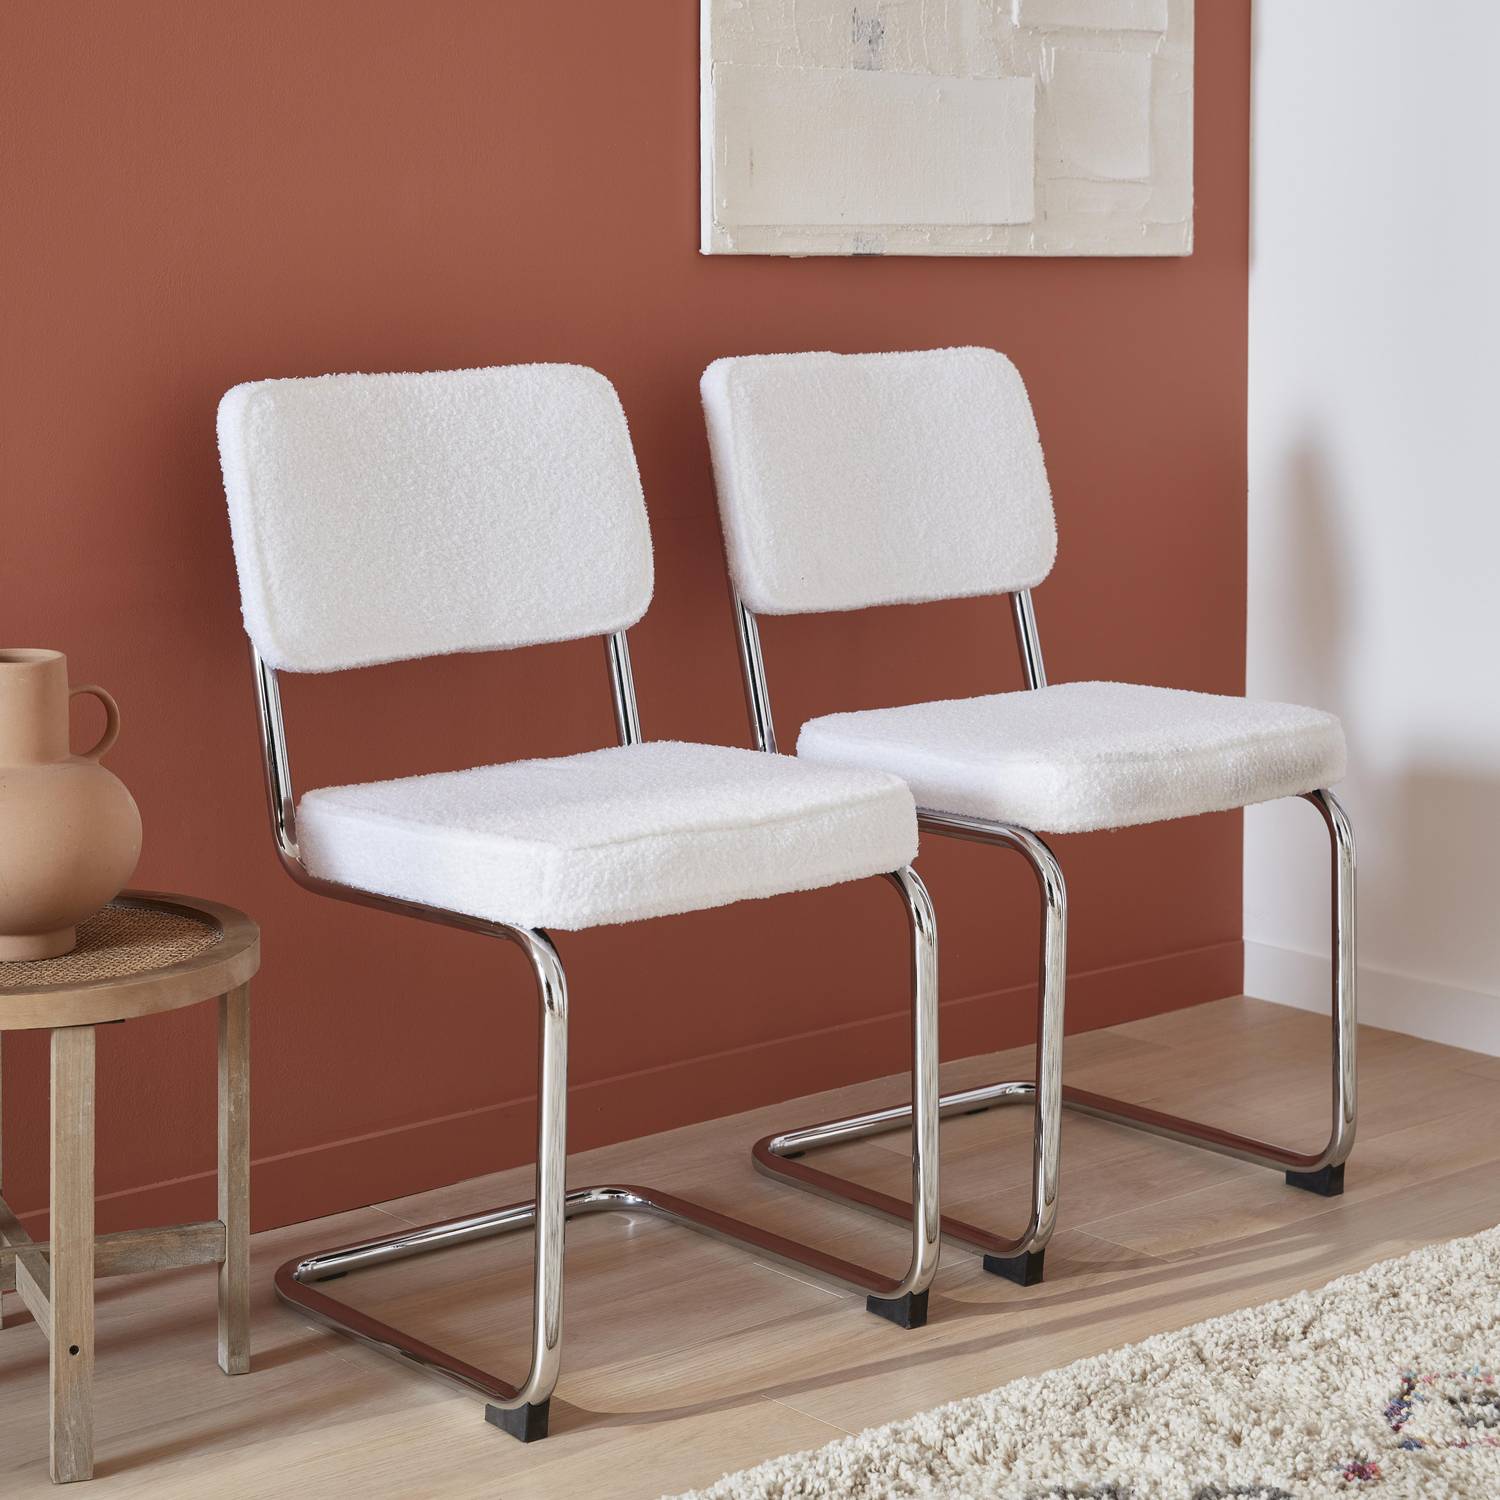 2 sillas voladizas - Maja - con rizos blancos, 46 x 54,5 x 84,5cm   Photo1